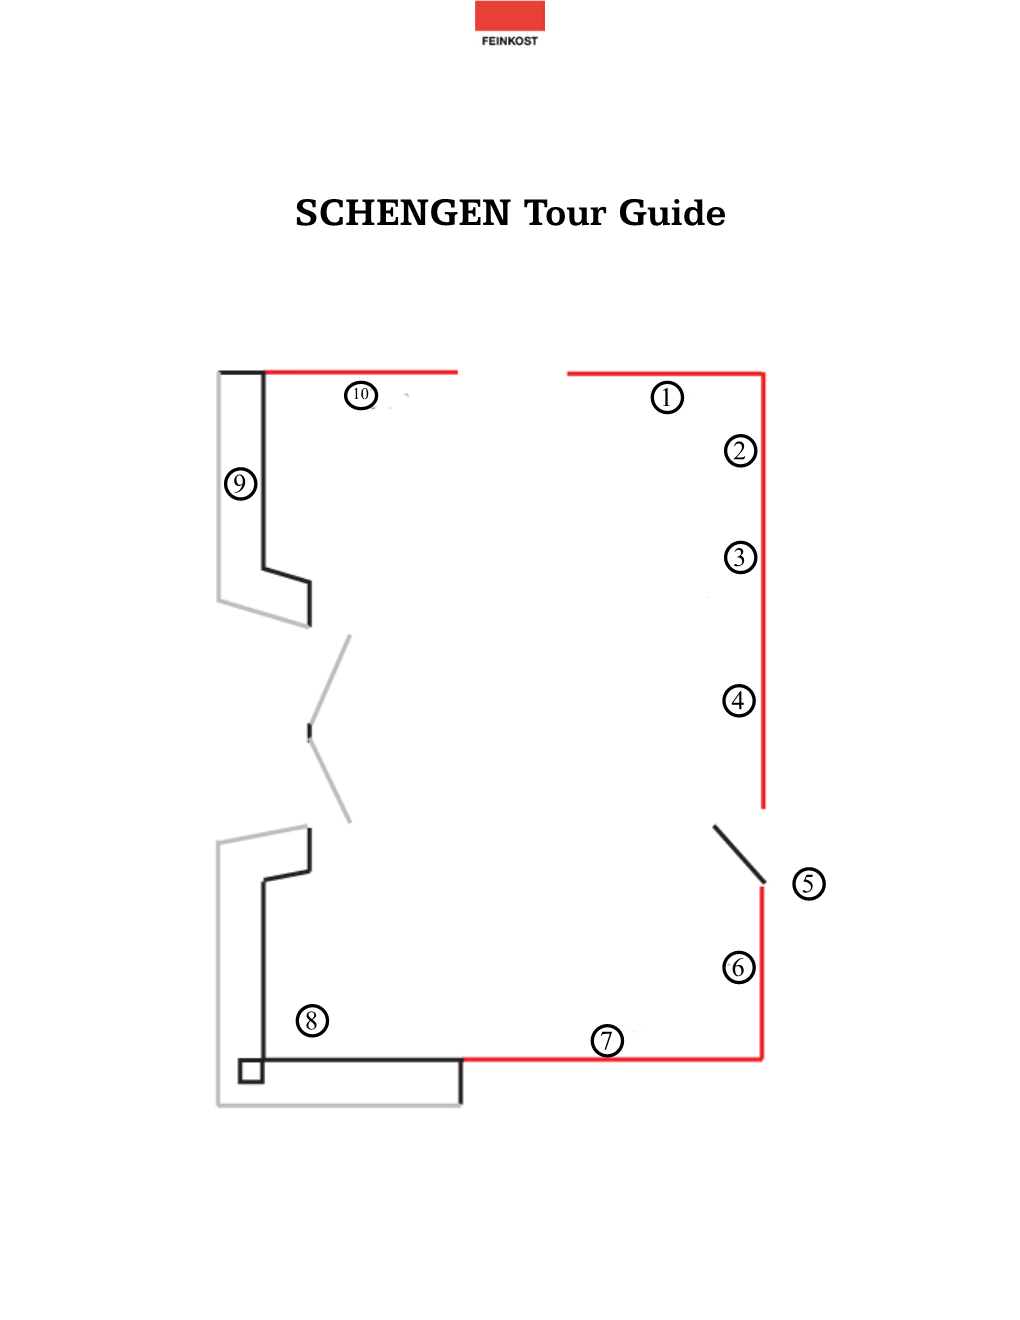 SCHENGEN Tour Guide, FEINKOST, 2008